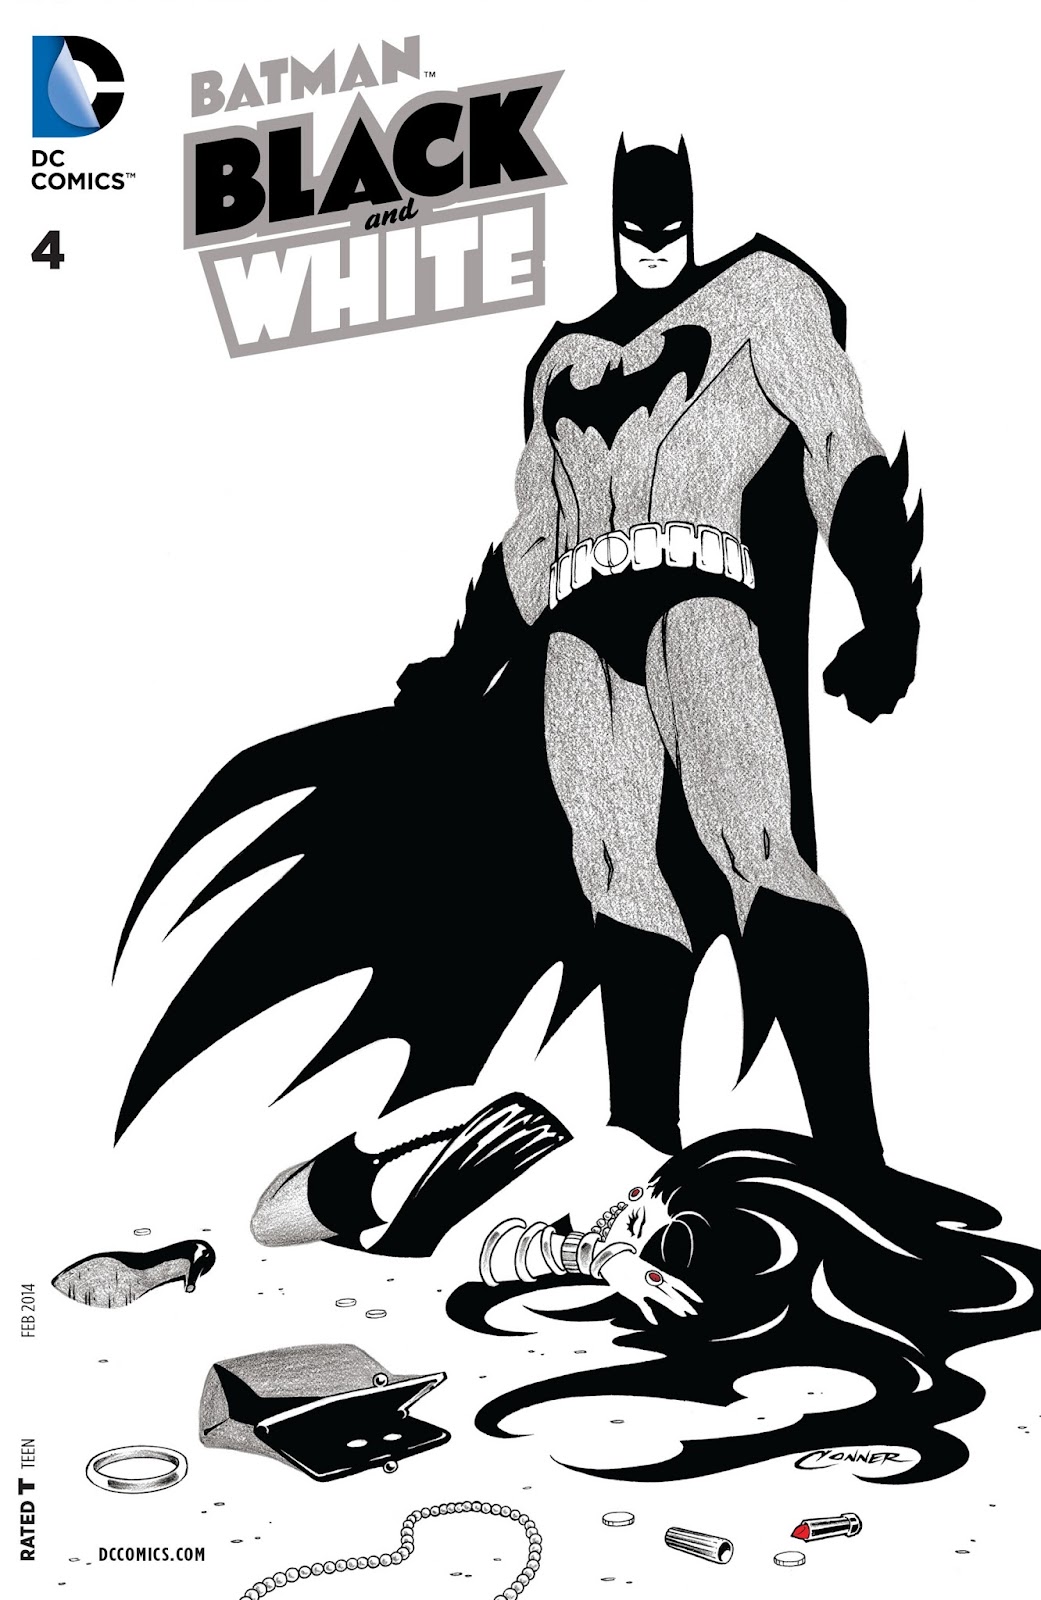 Batman black. Бэтмен (DC Comics) Black and White. Черный Бэтмен комикс. Комиксы Бэтмен черно белые. Бэтмен чёрное и белое.